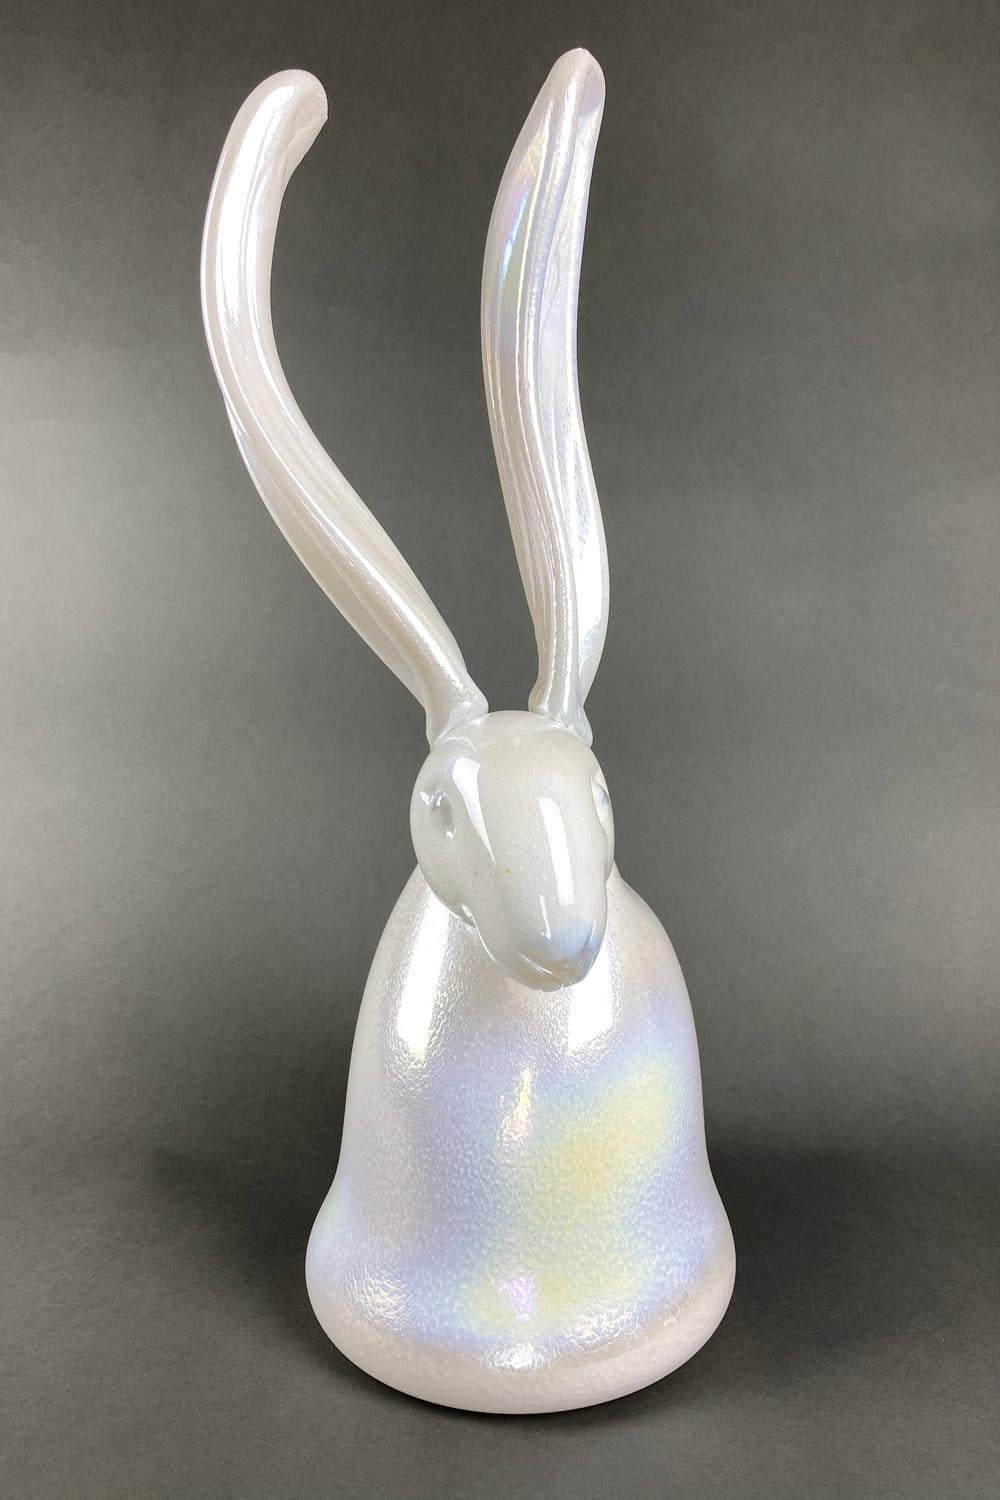 Enamel White Bunny "Bunny Sculpture" Blown glass sculpture